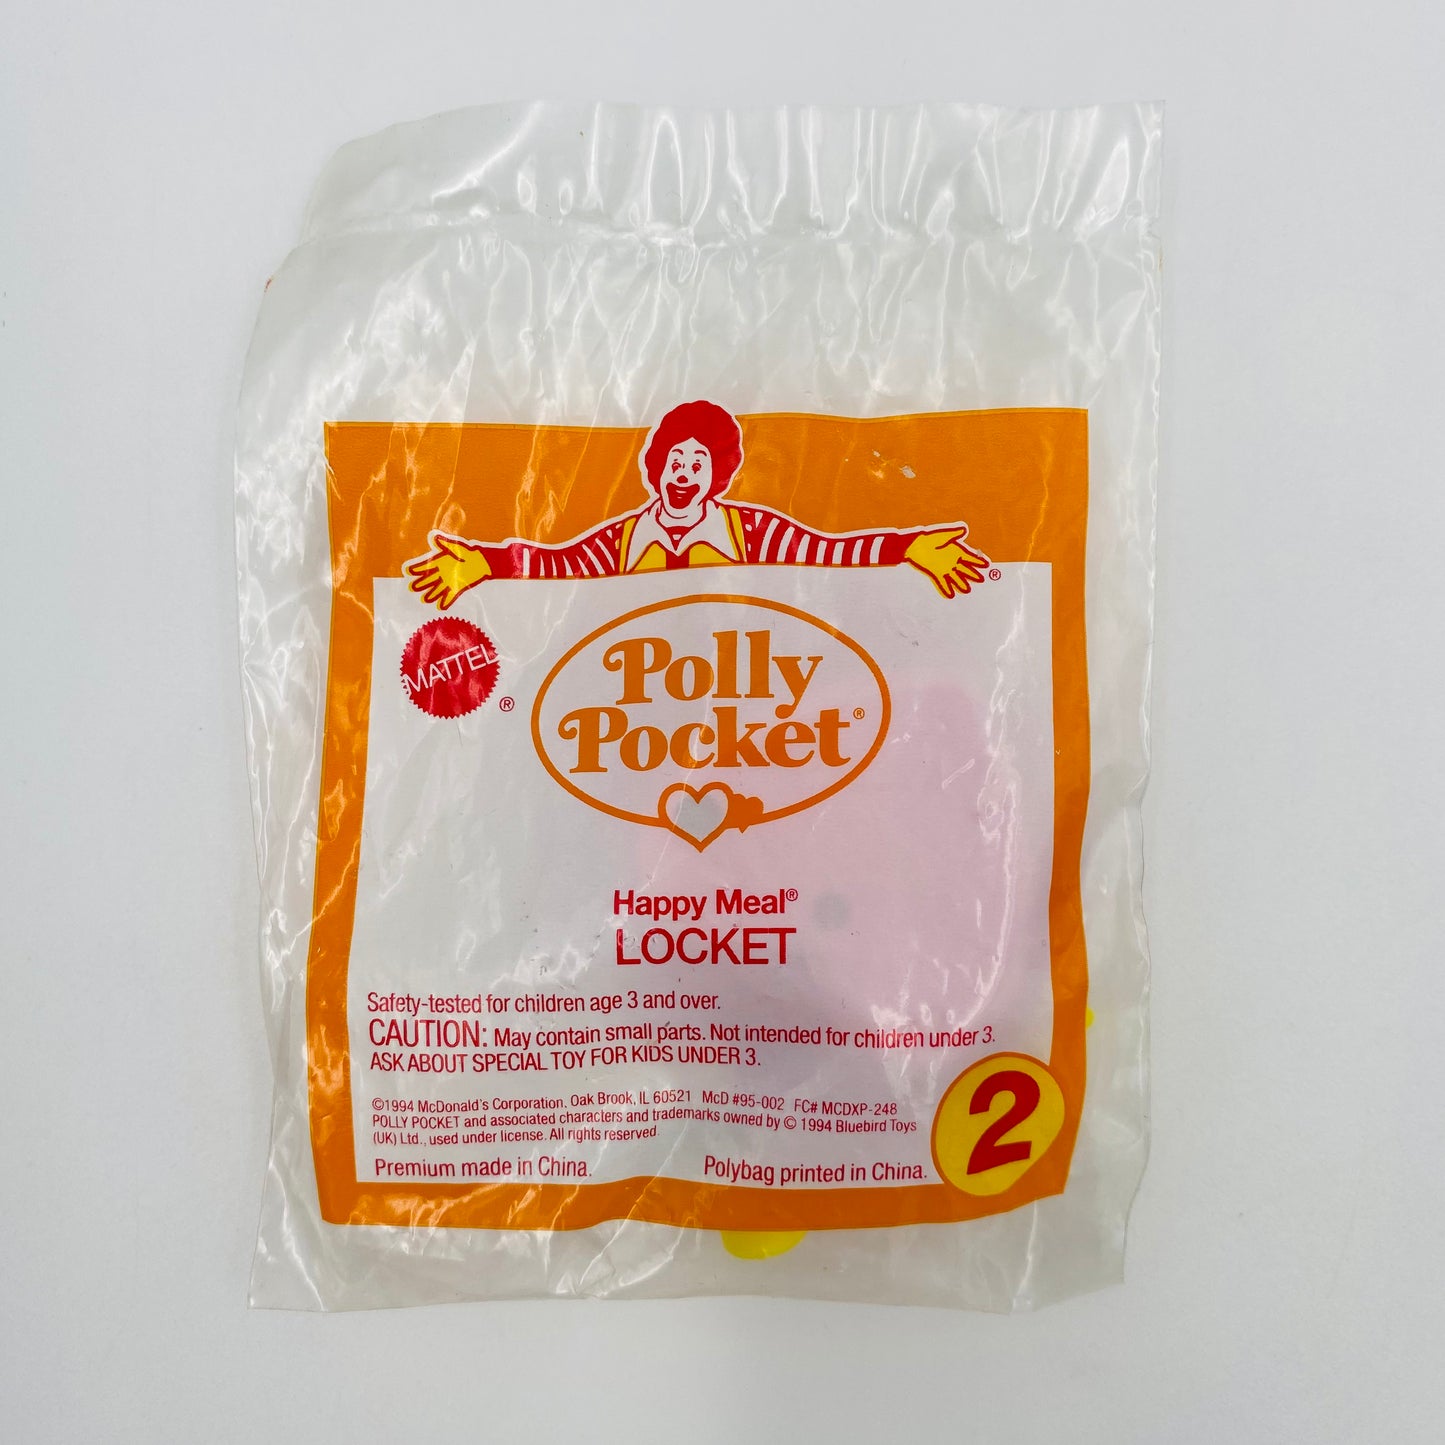 Polly Pocket Locket McDonald's Happy Meal toy (1994) bagged